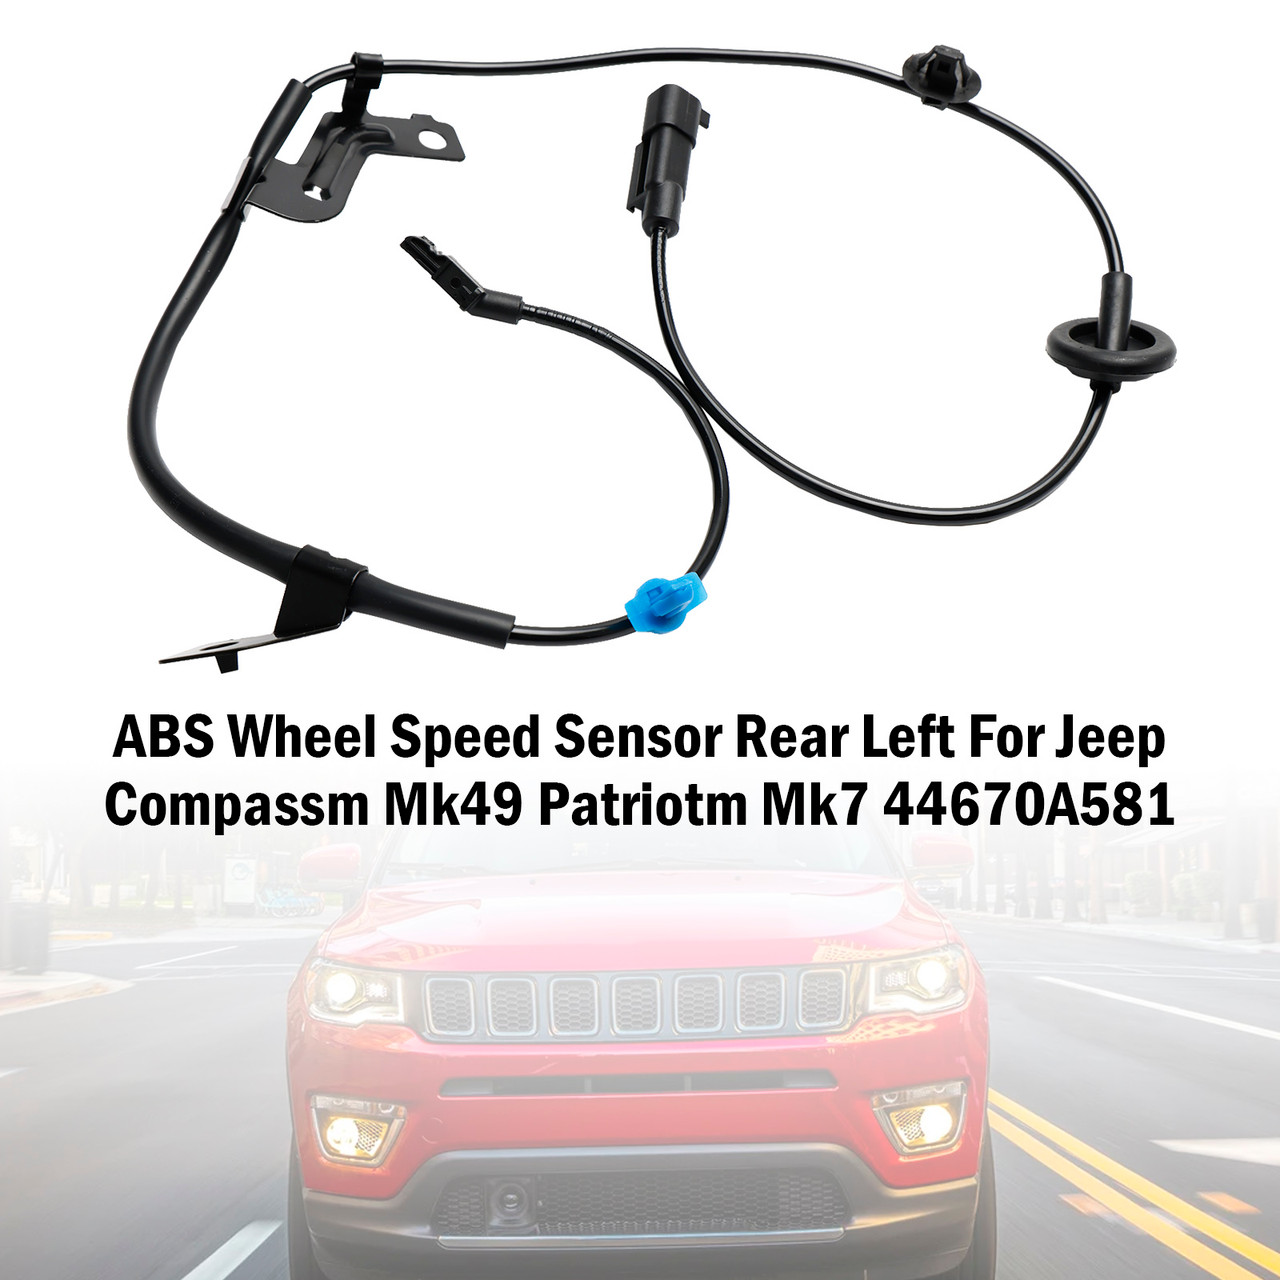 ABS Wheel Speed Sensor Rear Left For Jeep Compassm Mk49 Patriotm Mk7 44670A581